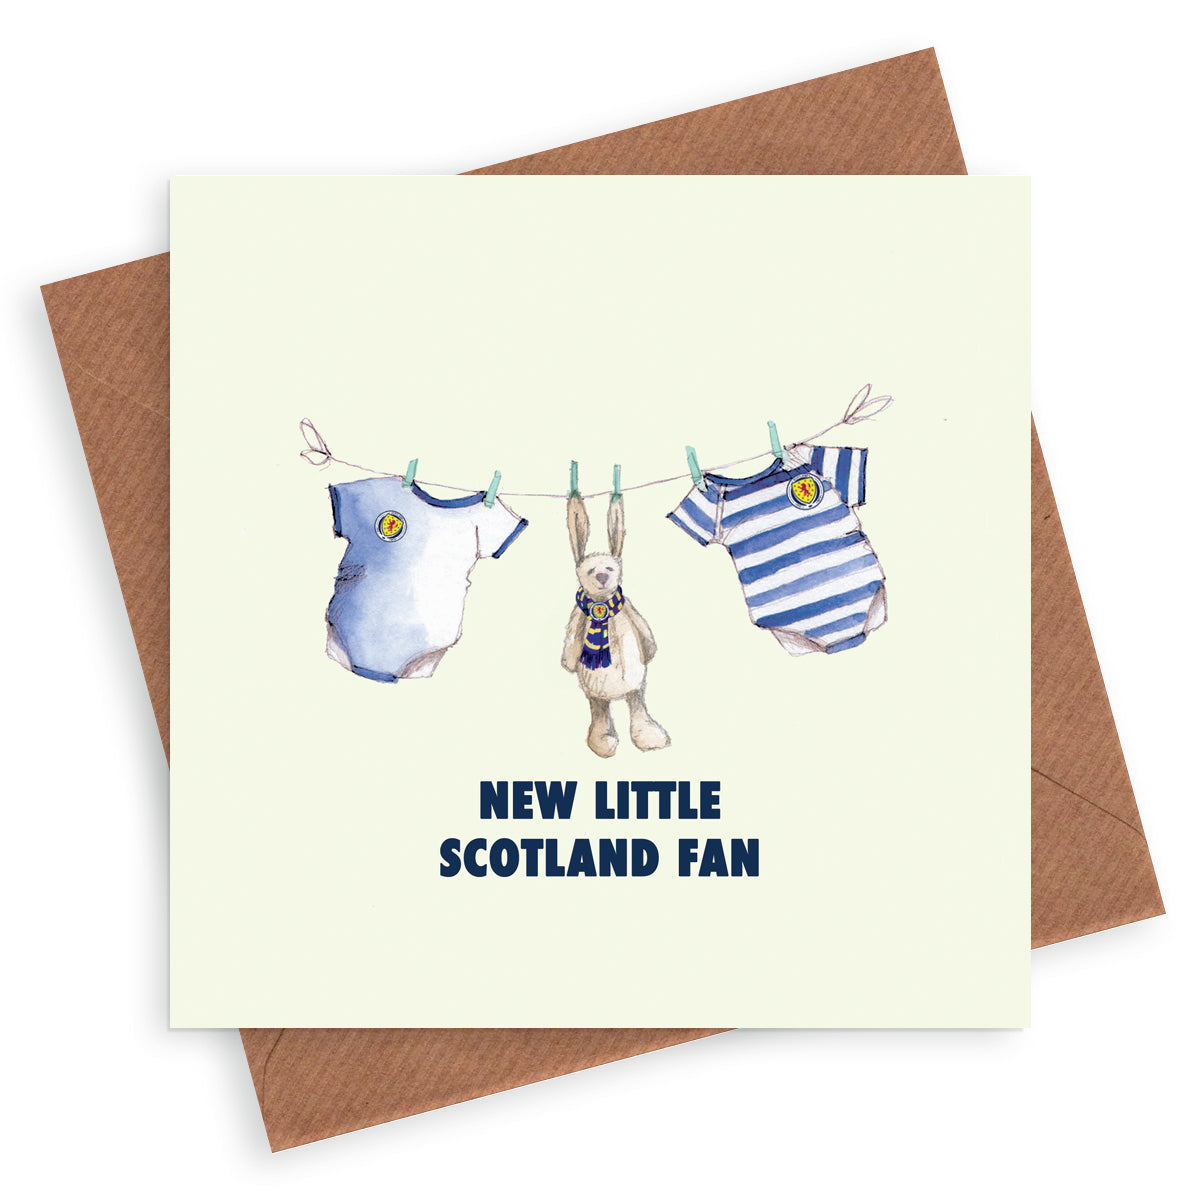 Scotland Football Anniversary Greeting Card